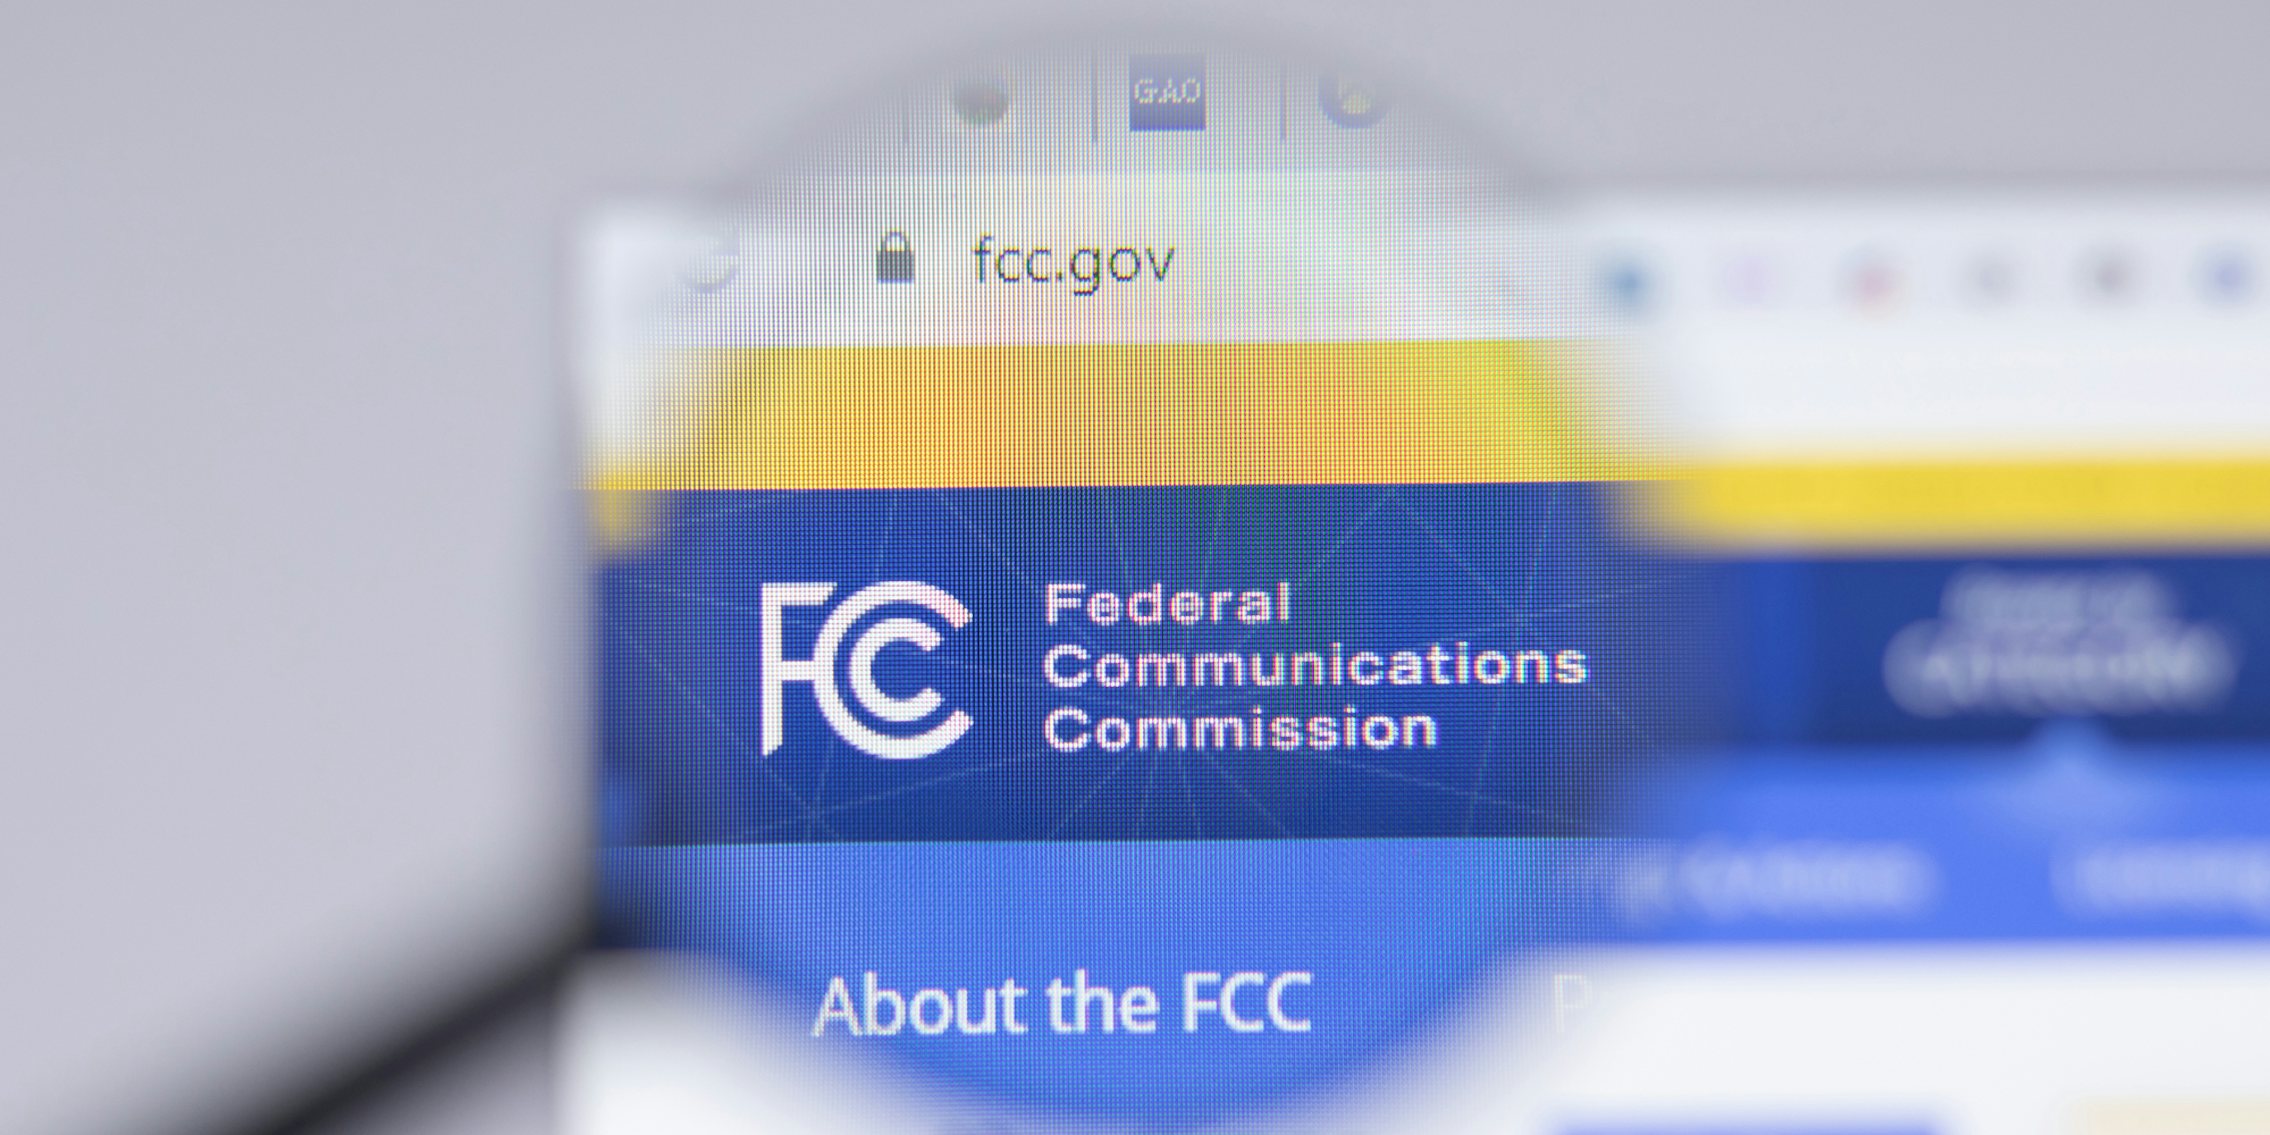 FCC logo close-up on website page